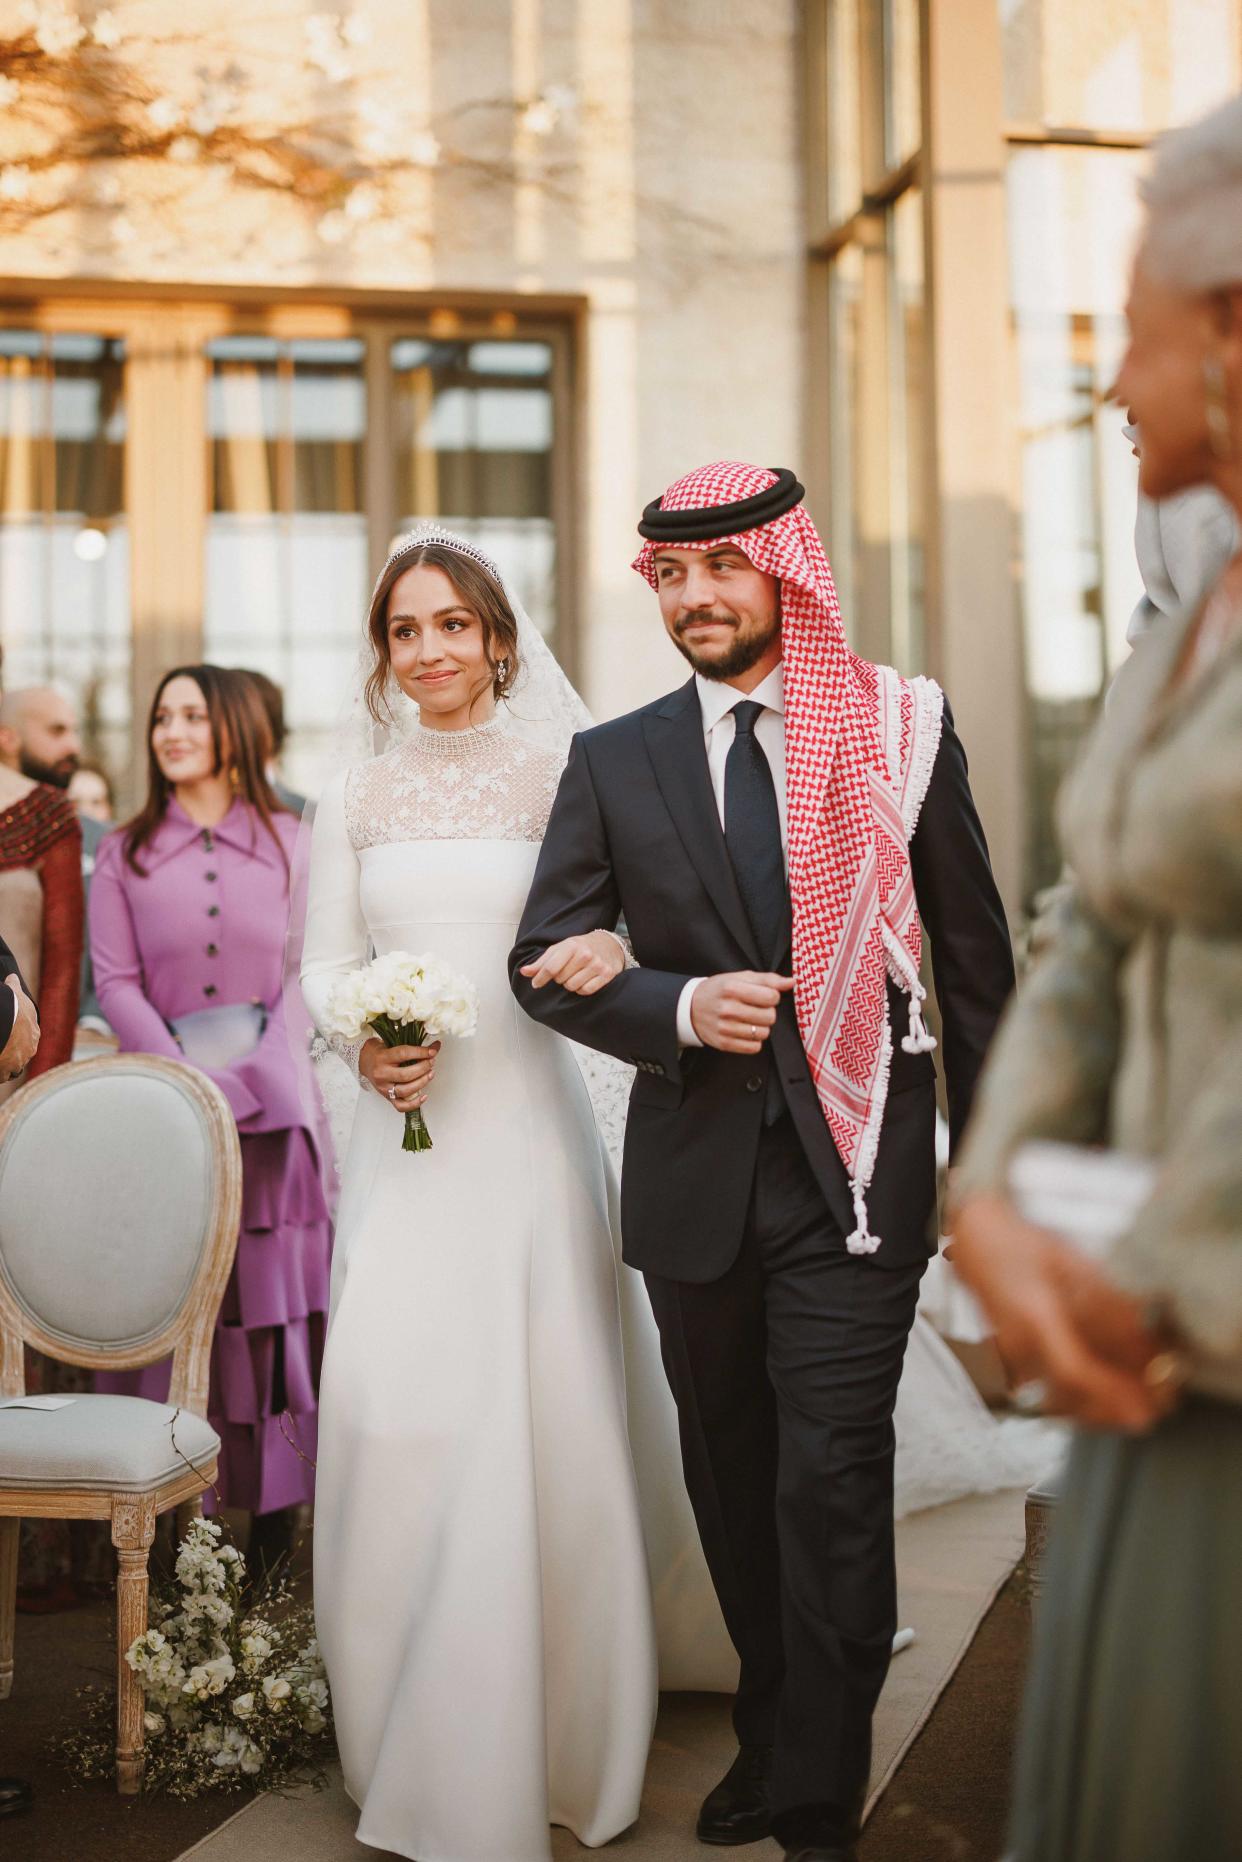 The Royal Wedding Of Her Royal Highness Princess Iman And Jameel Alexander Thermiotis (Handout / Jordanian Royal Court/Getty Images)